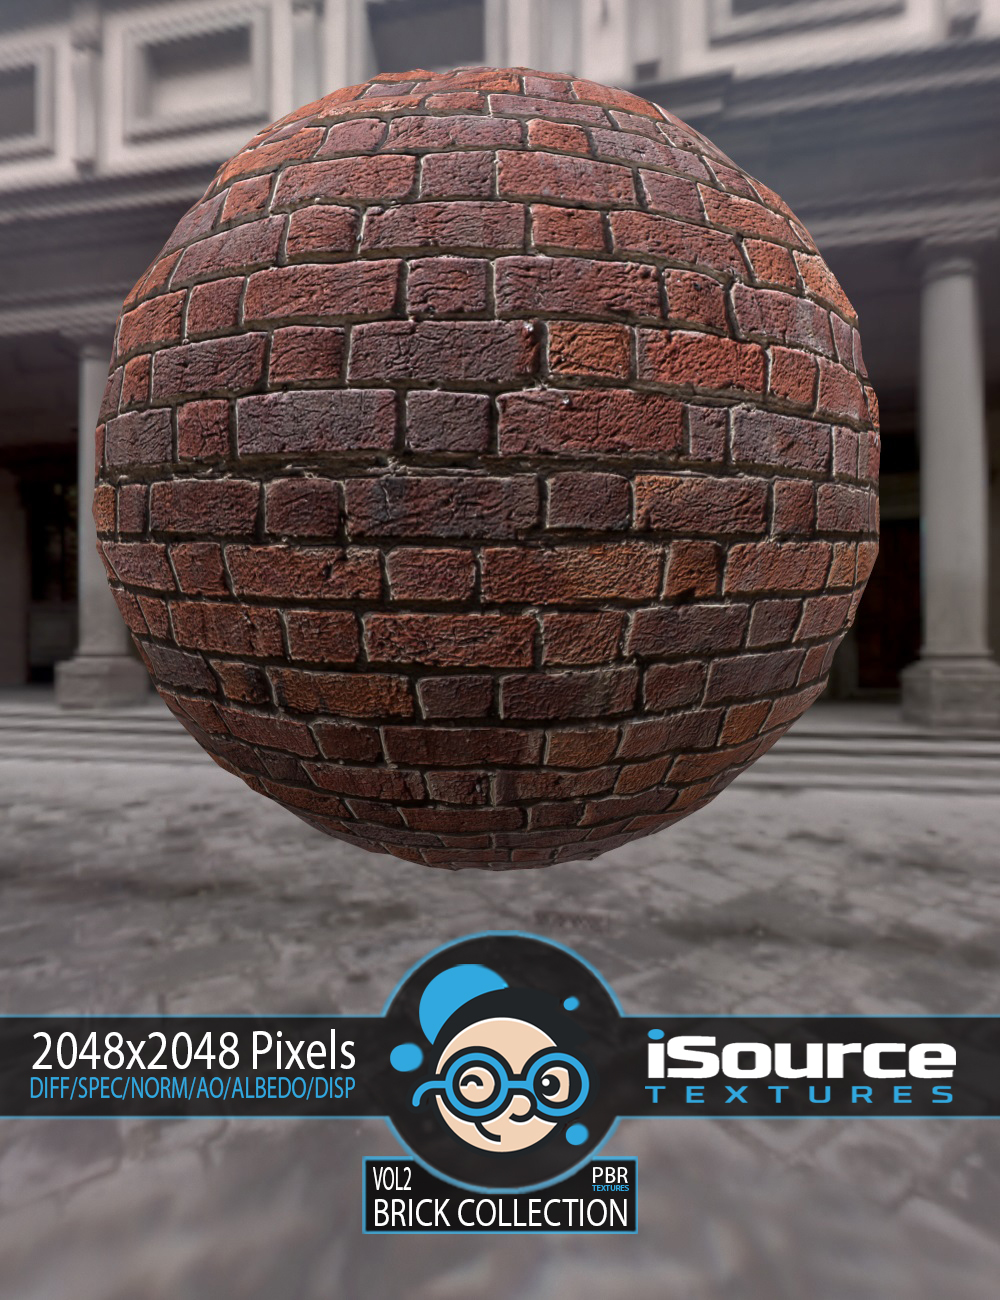 Brick Collection Merchant Resource - Vol2 (PBR Textures) by: iSourceTextures, 3D Models by Daz 3D